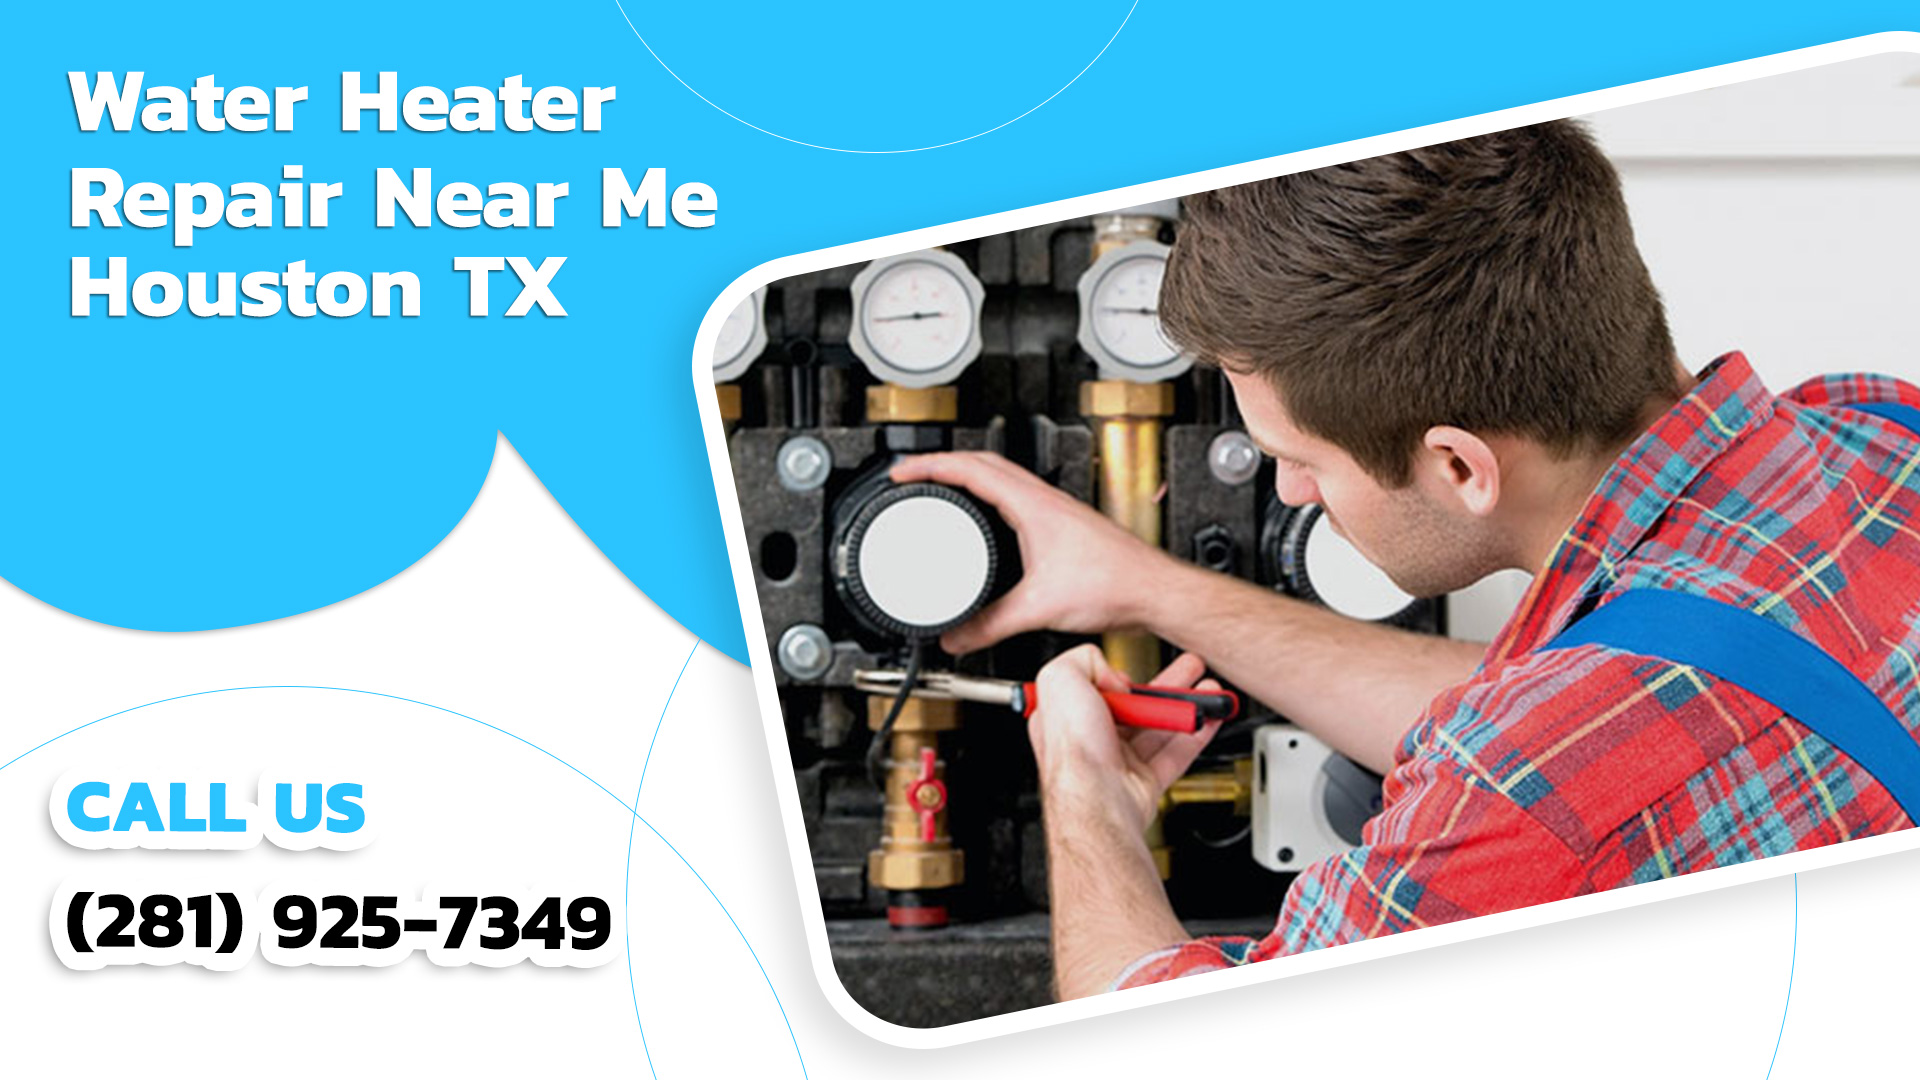 Water Heater Repair Near Me Houston TX / Install + Replace